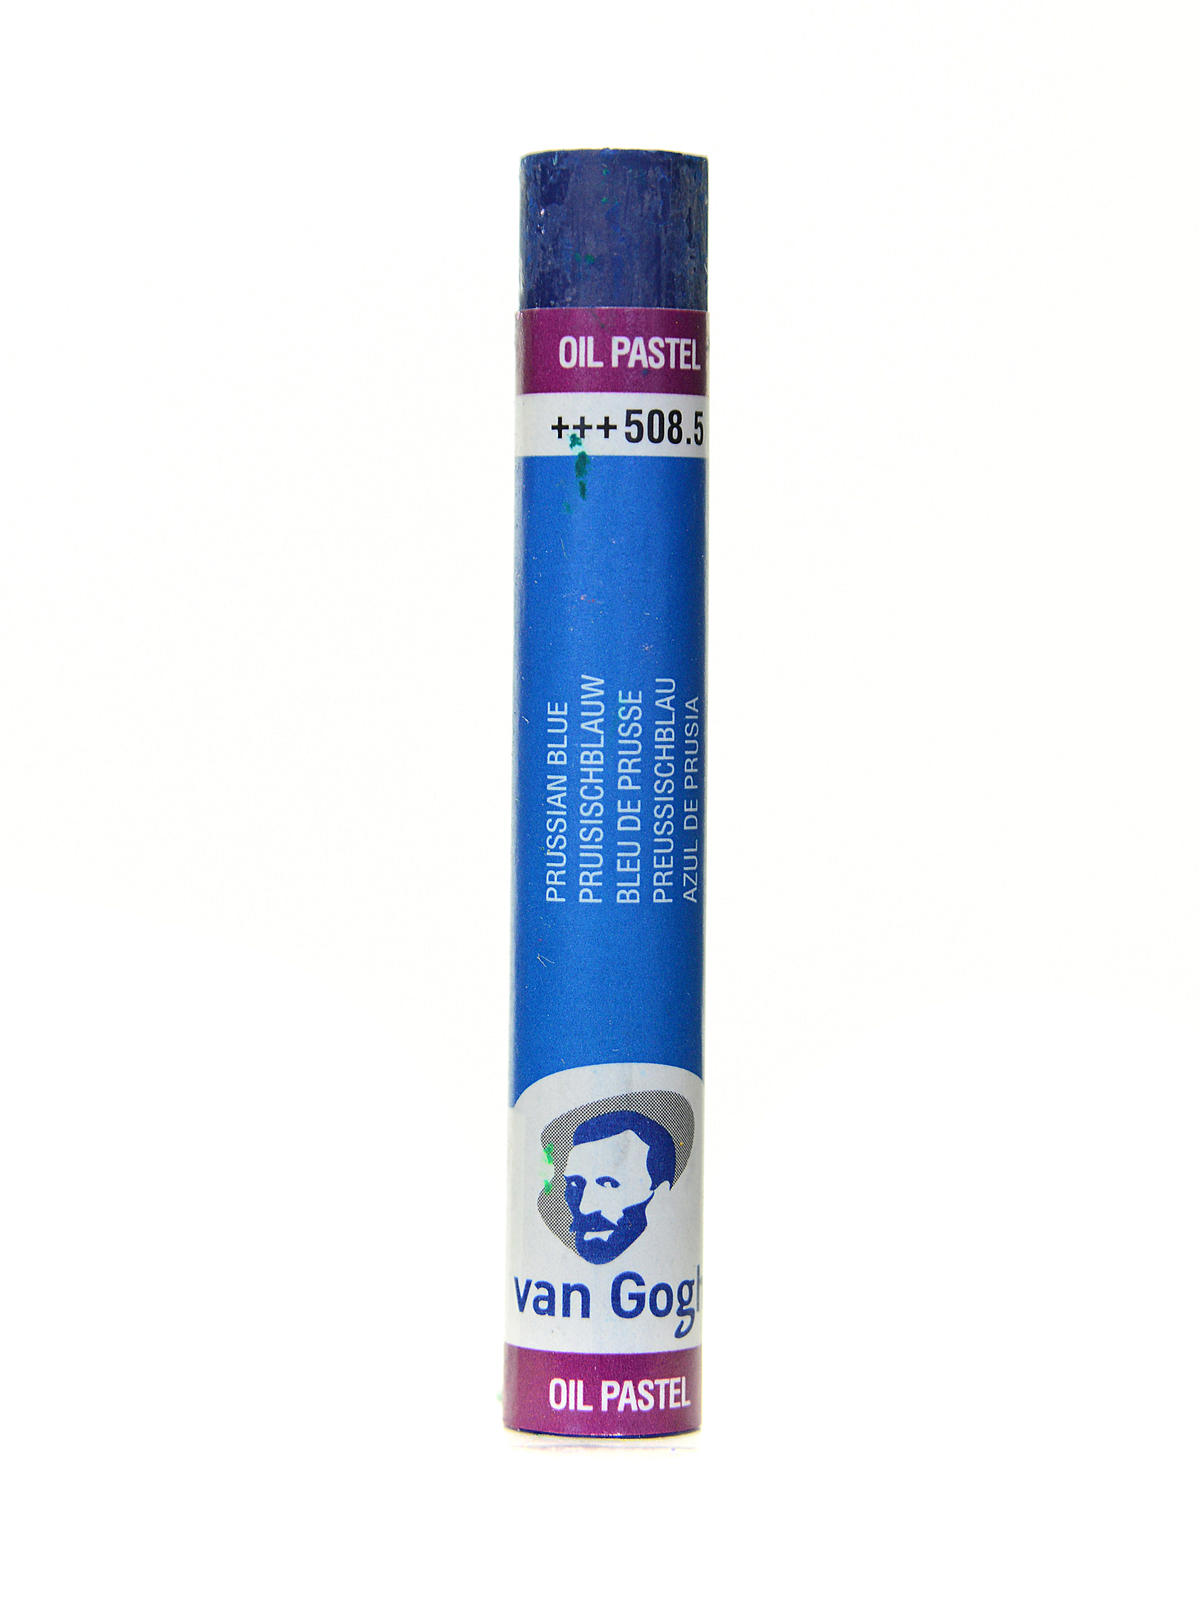 Oil Pastels Prussian Blue 508.5